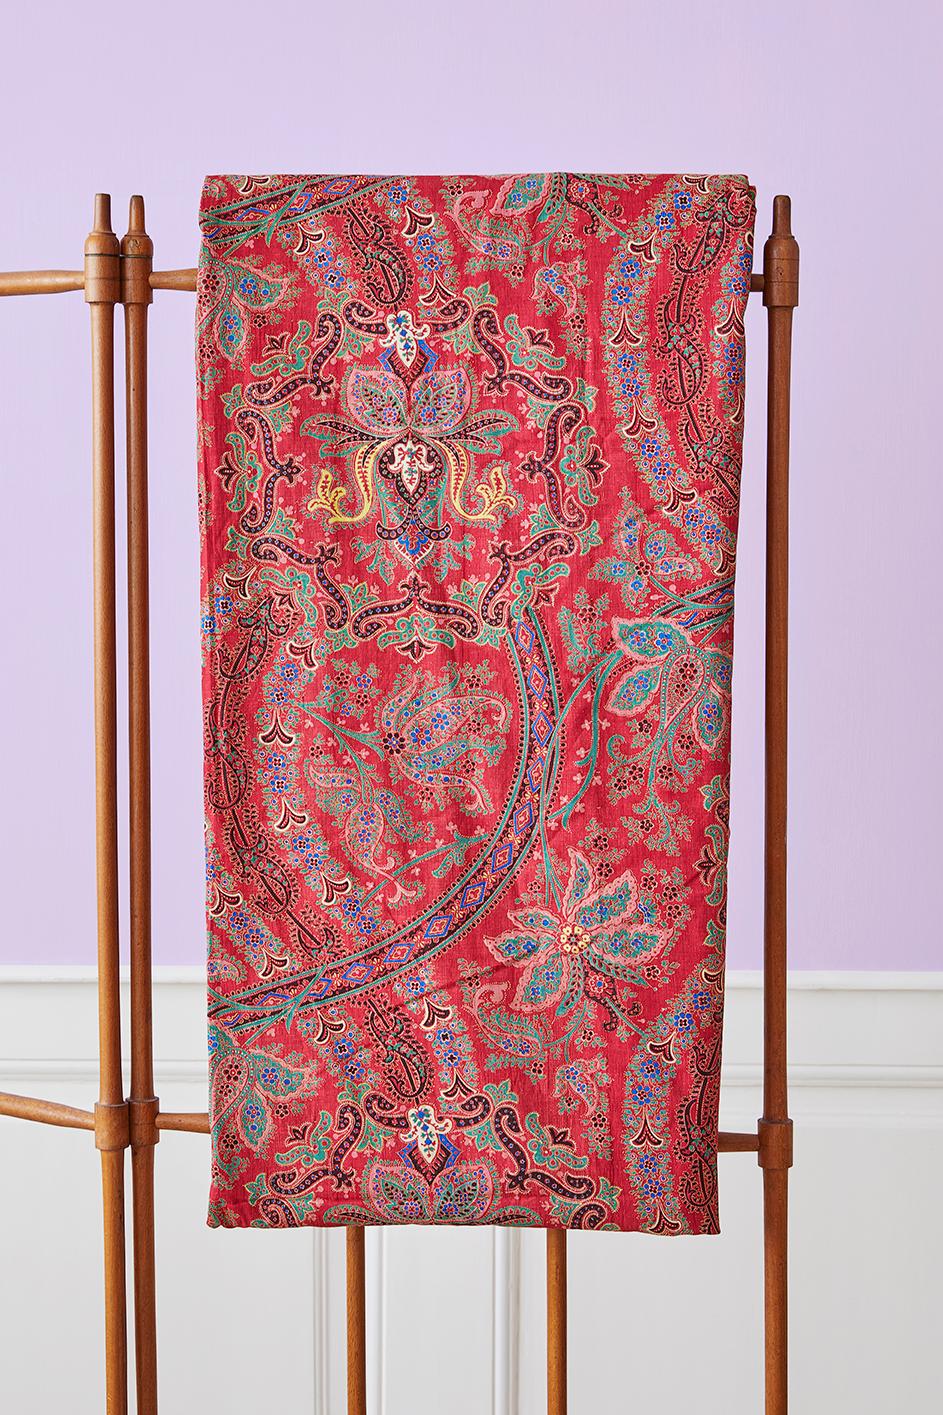 France, 19th Century

Large Paisley Curtain.

H 259 x W 246 cm